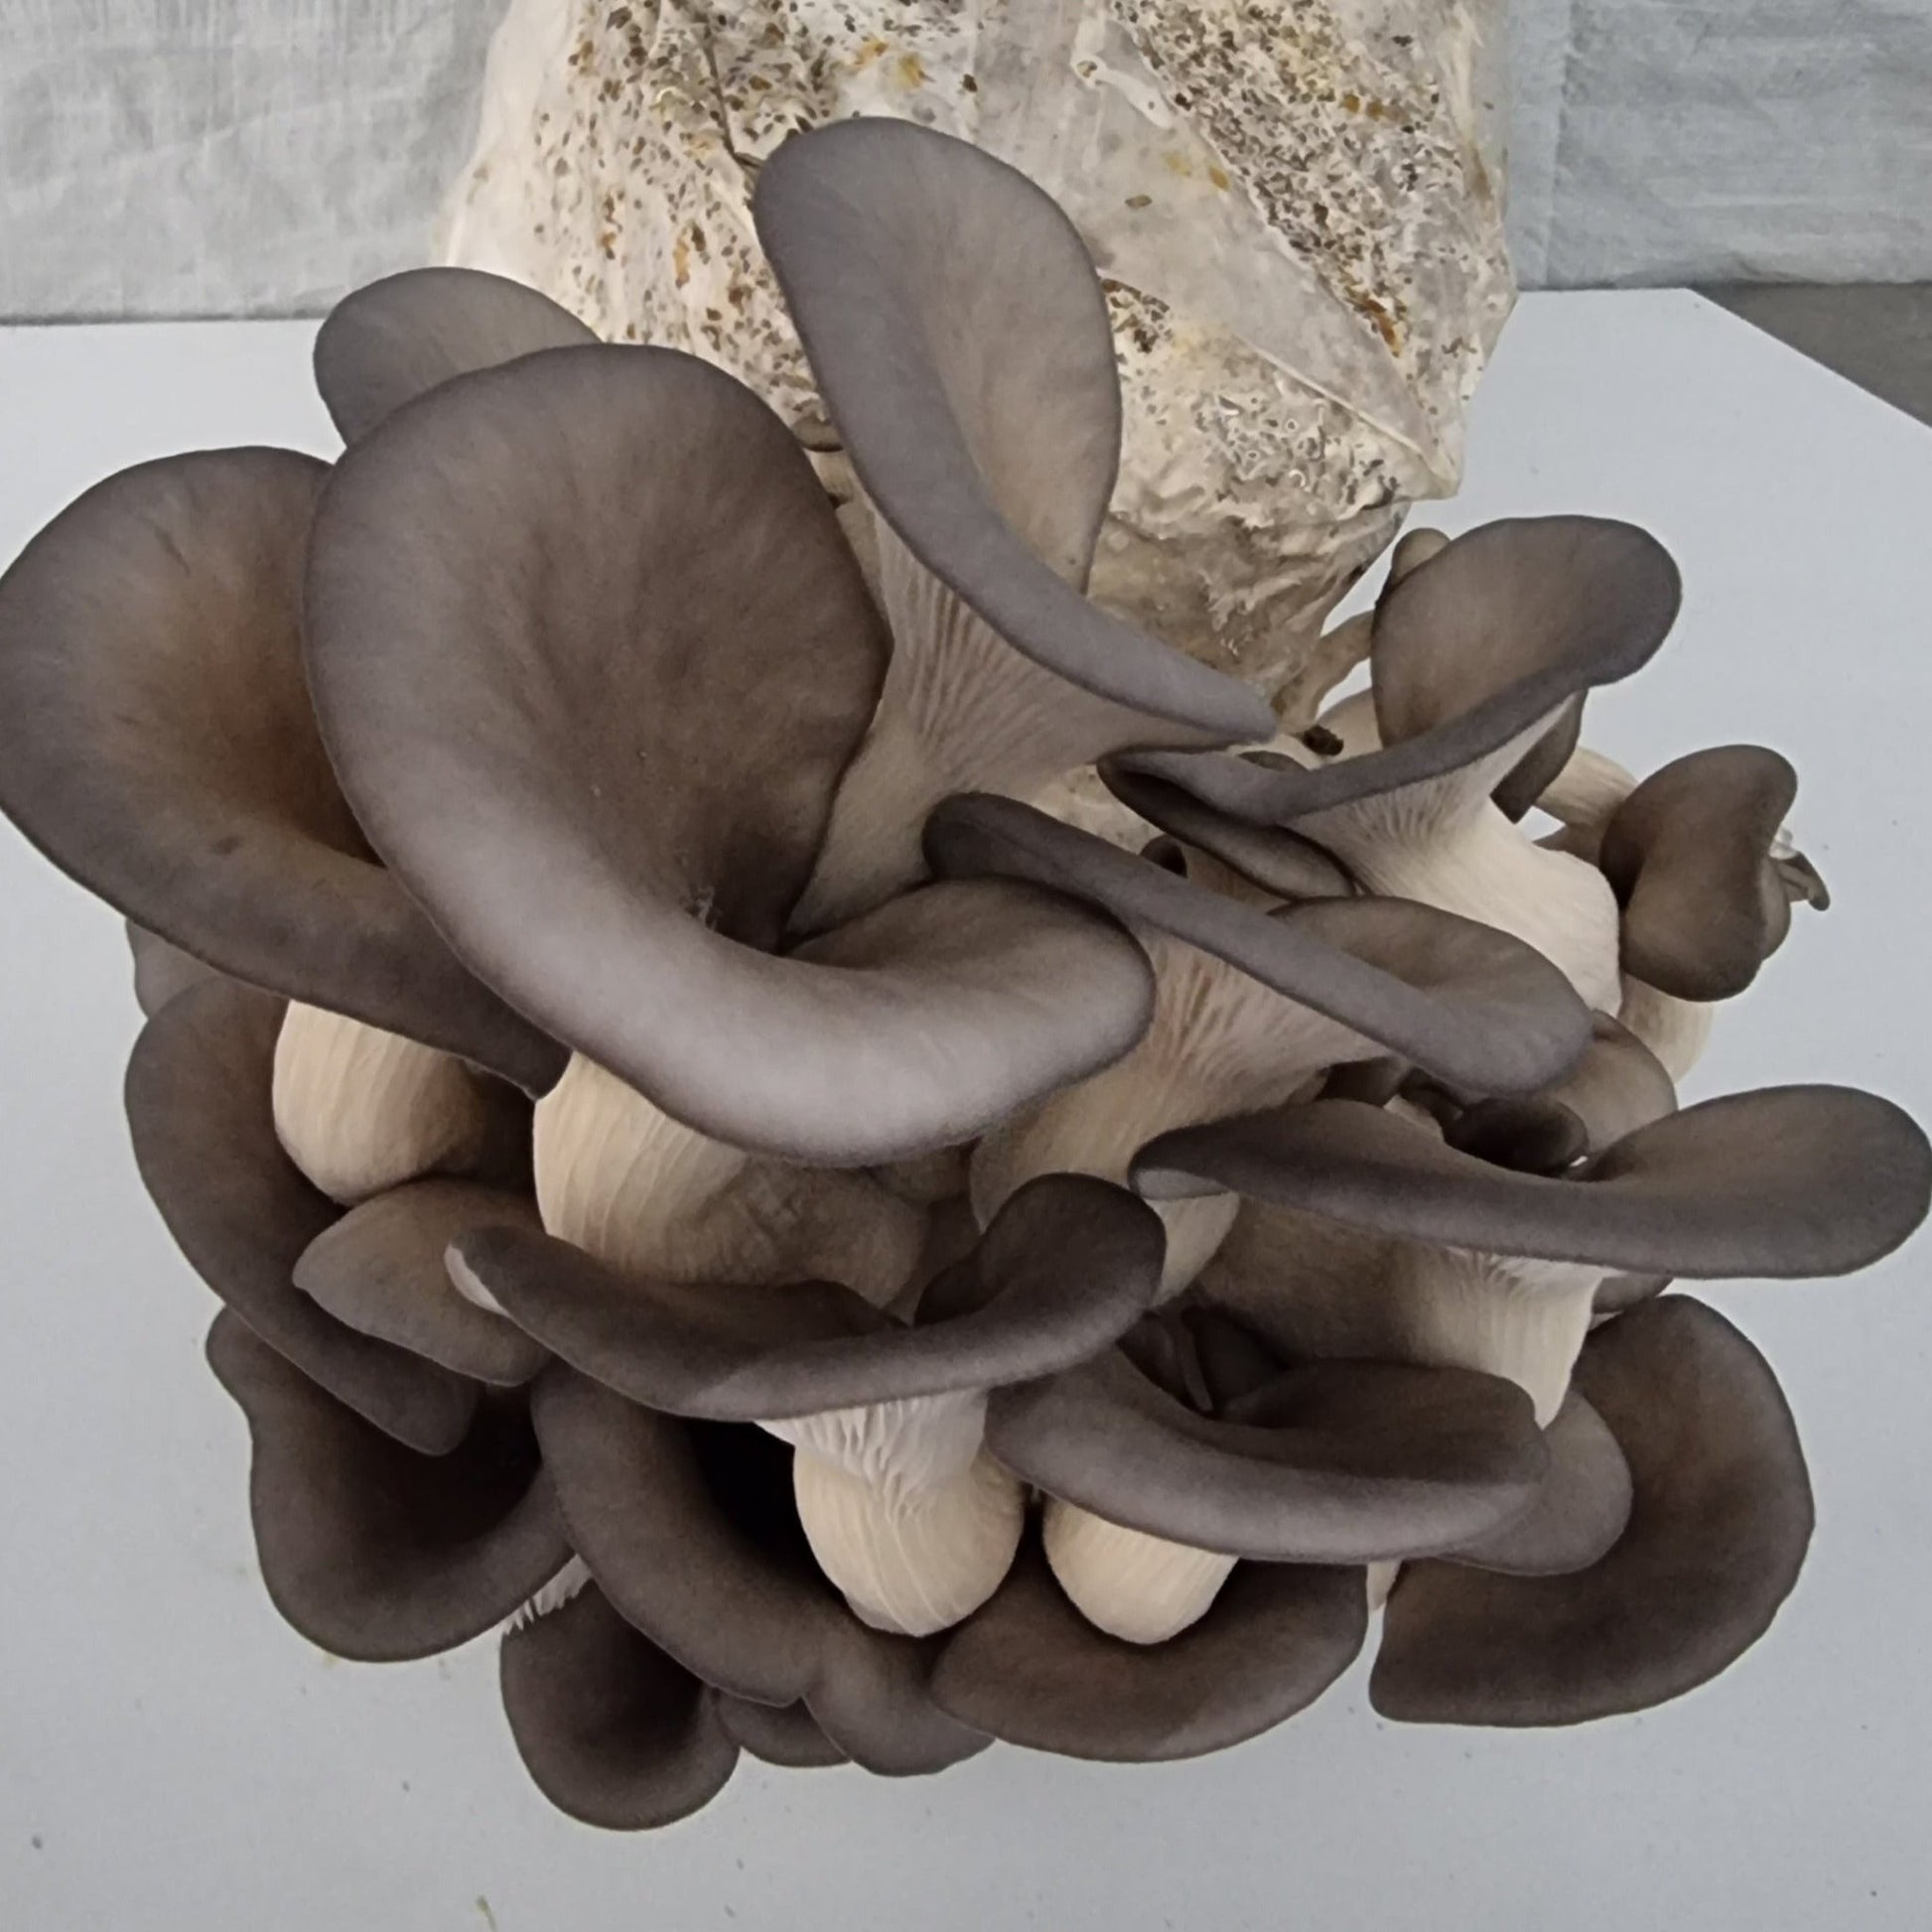 Blue Oyster - 1kg Organic | Australian Grown -Exotic Mushroom Xotic Mushrooms